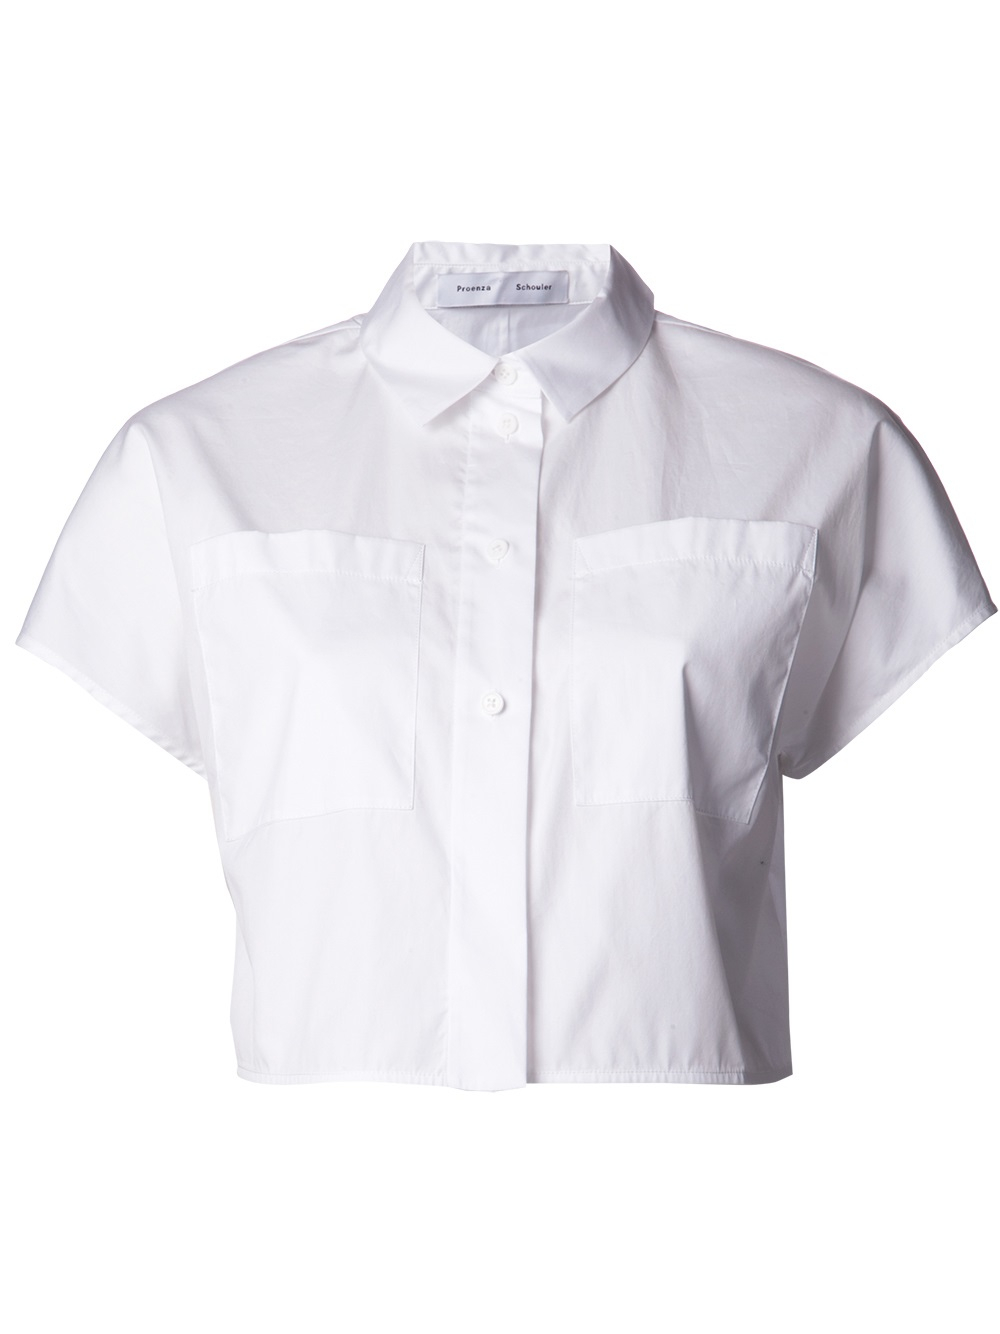 Lyst - Proenza schouler Cropped Poplin Shirt in White